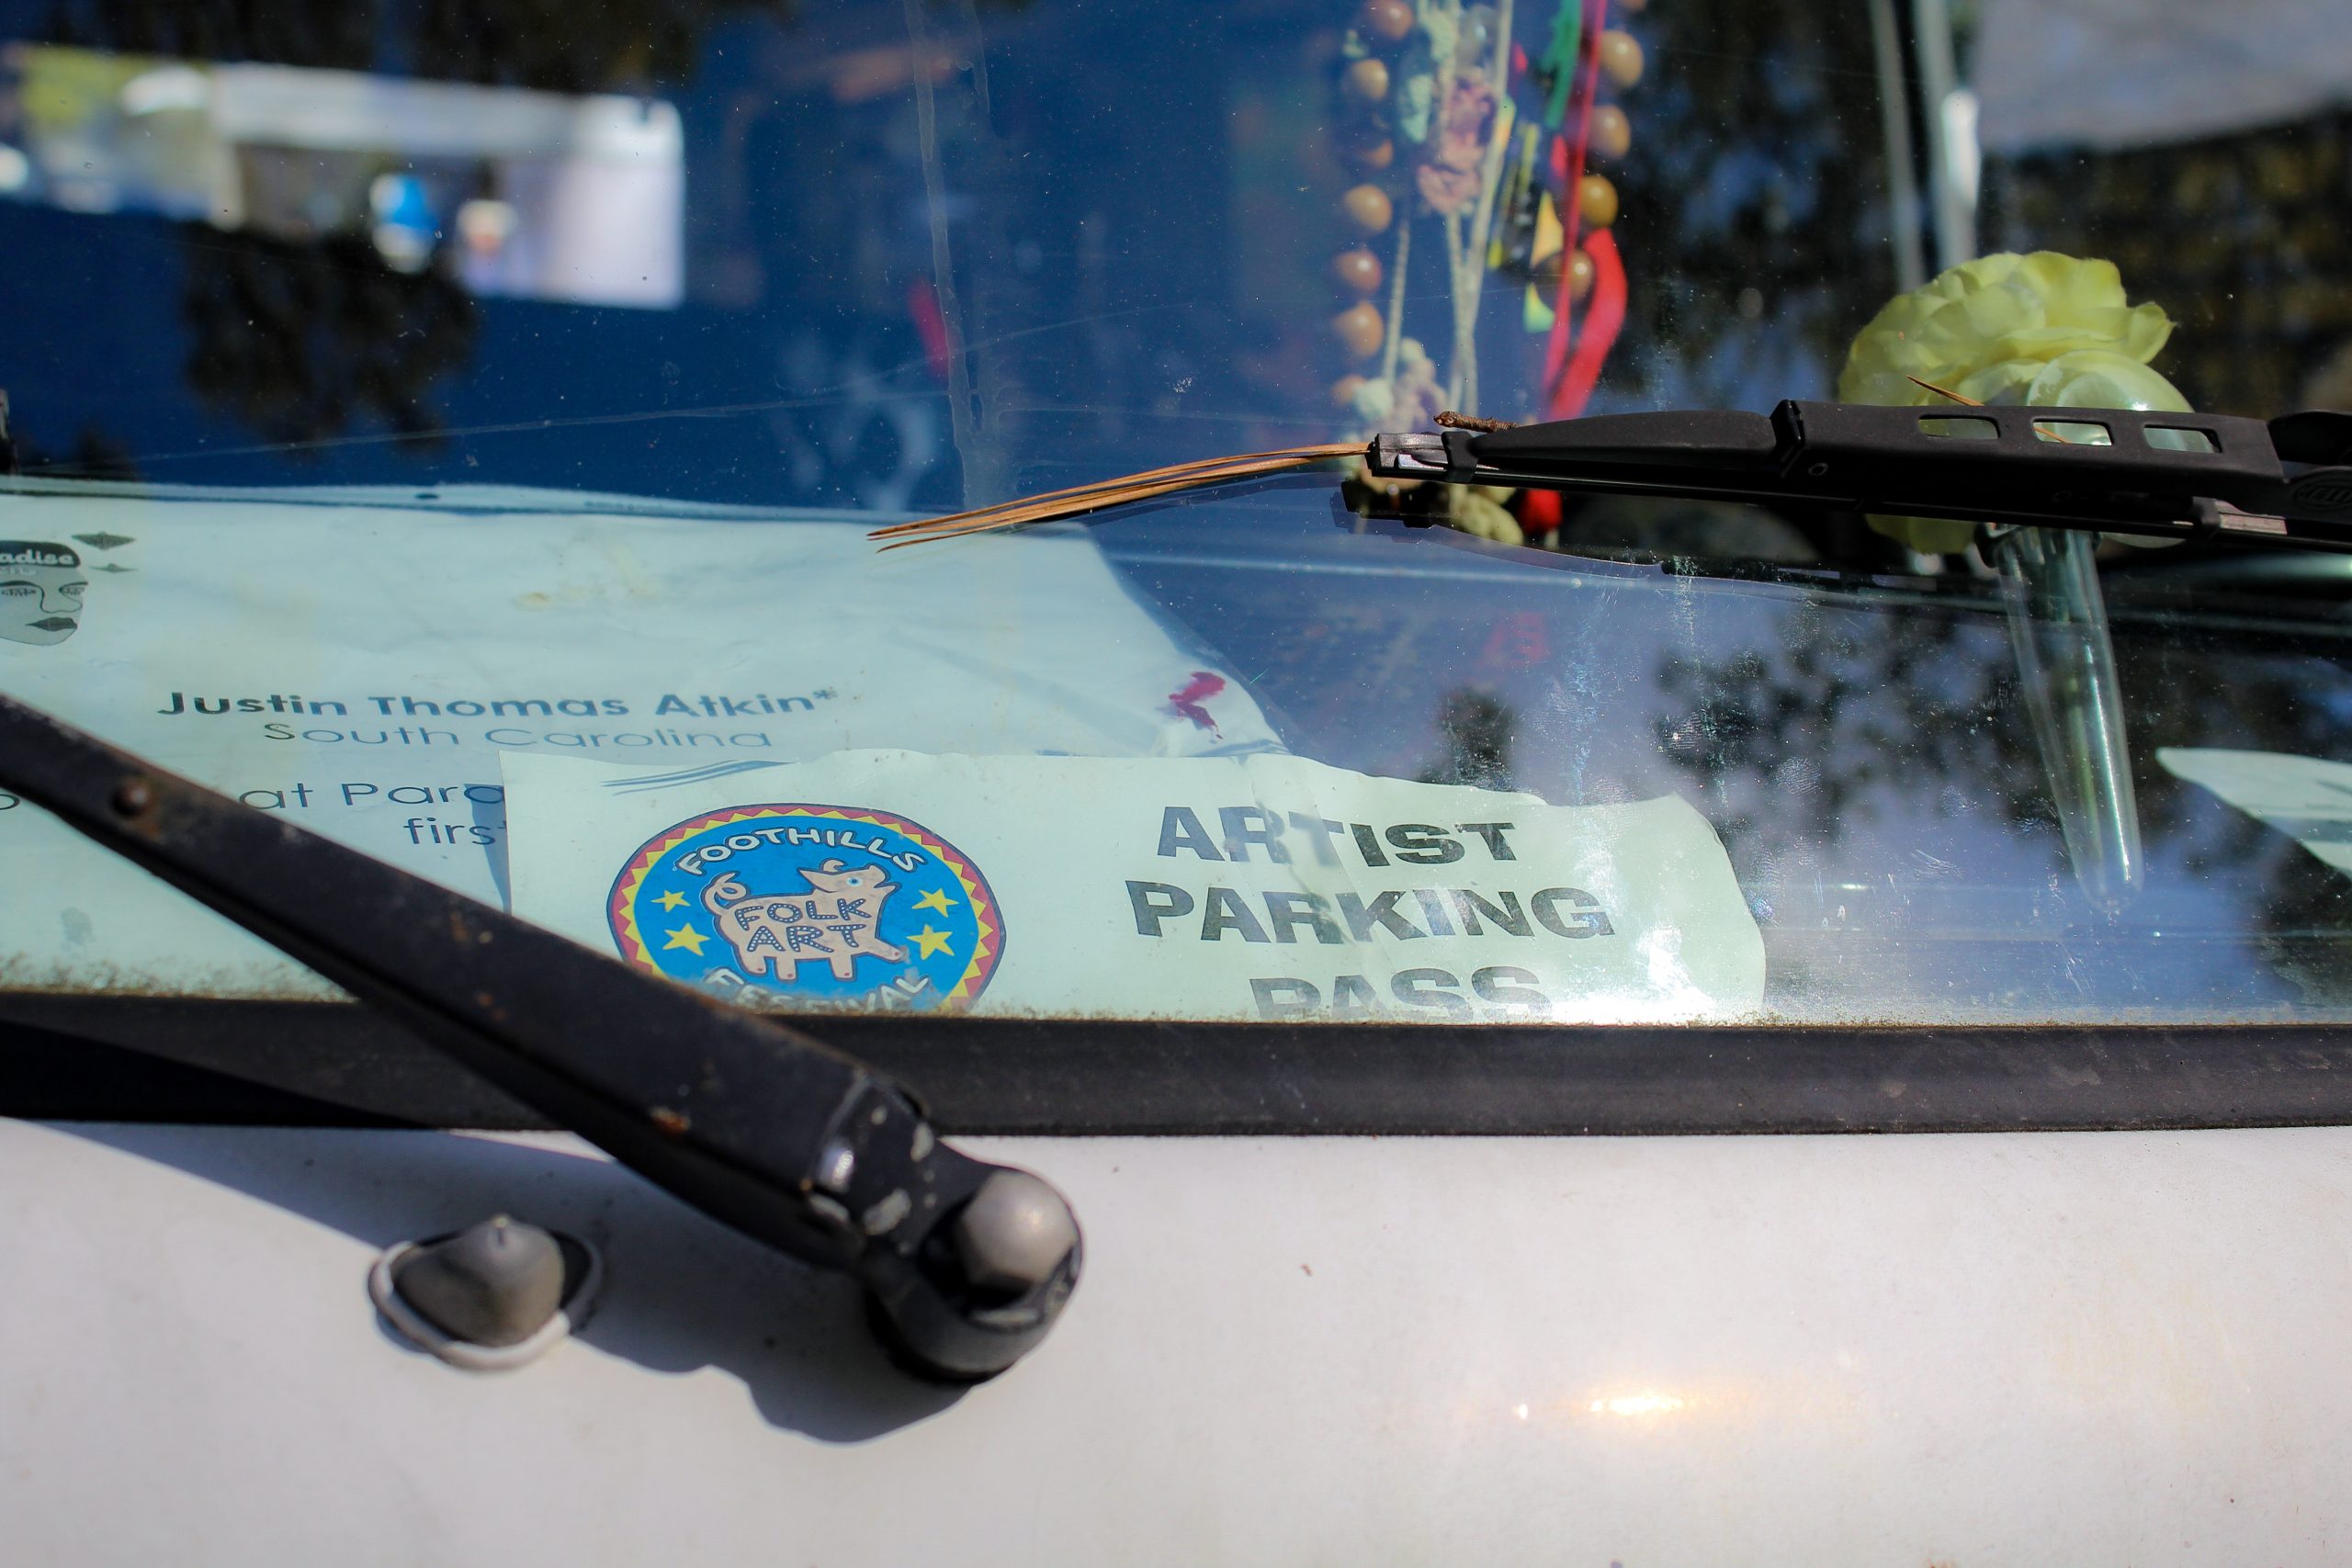 A parked car displays a badge: Artist Parking Pass.